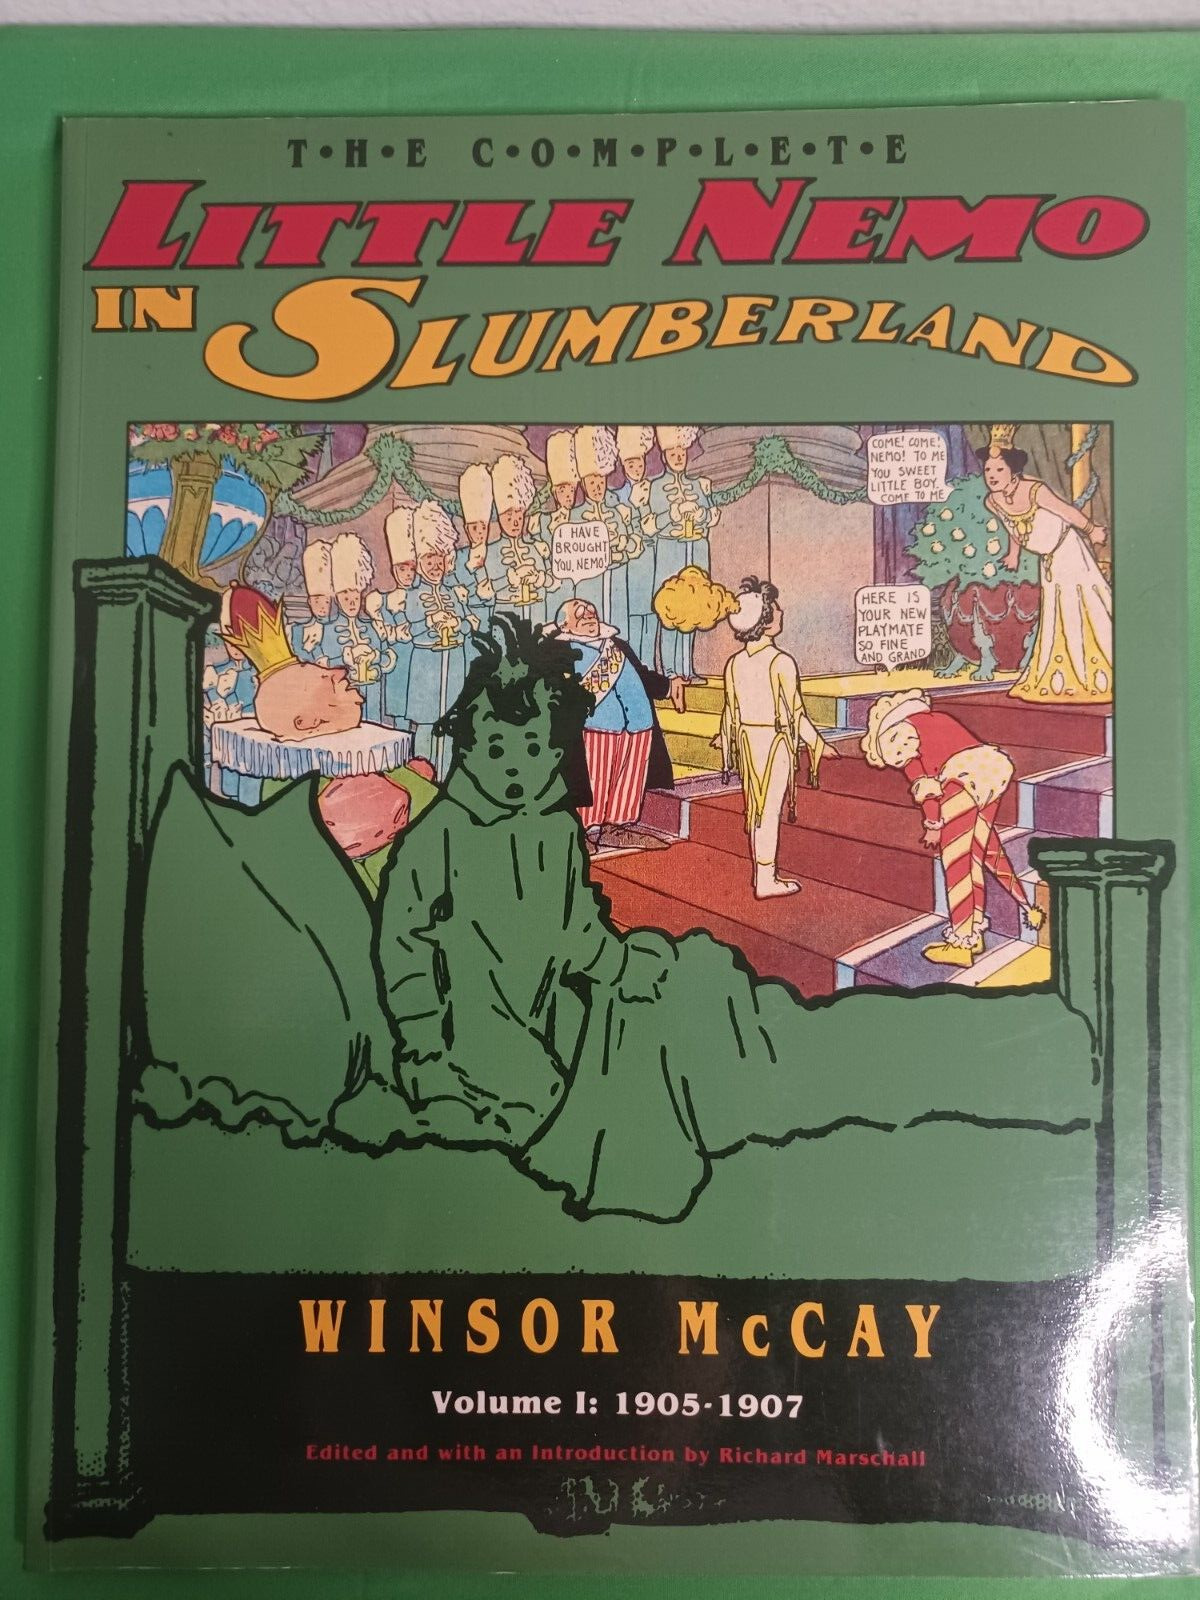 The Complete Little Nemo in Slumberland #1 (Fantagraphics Books, February 1989)